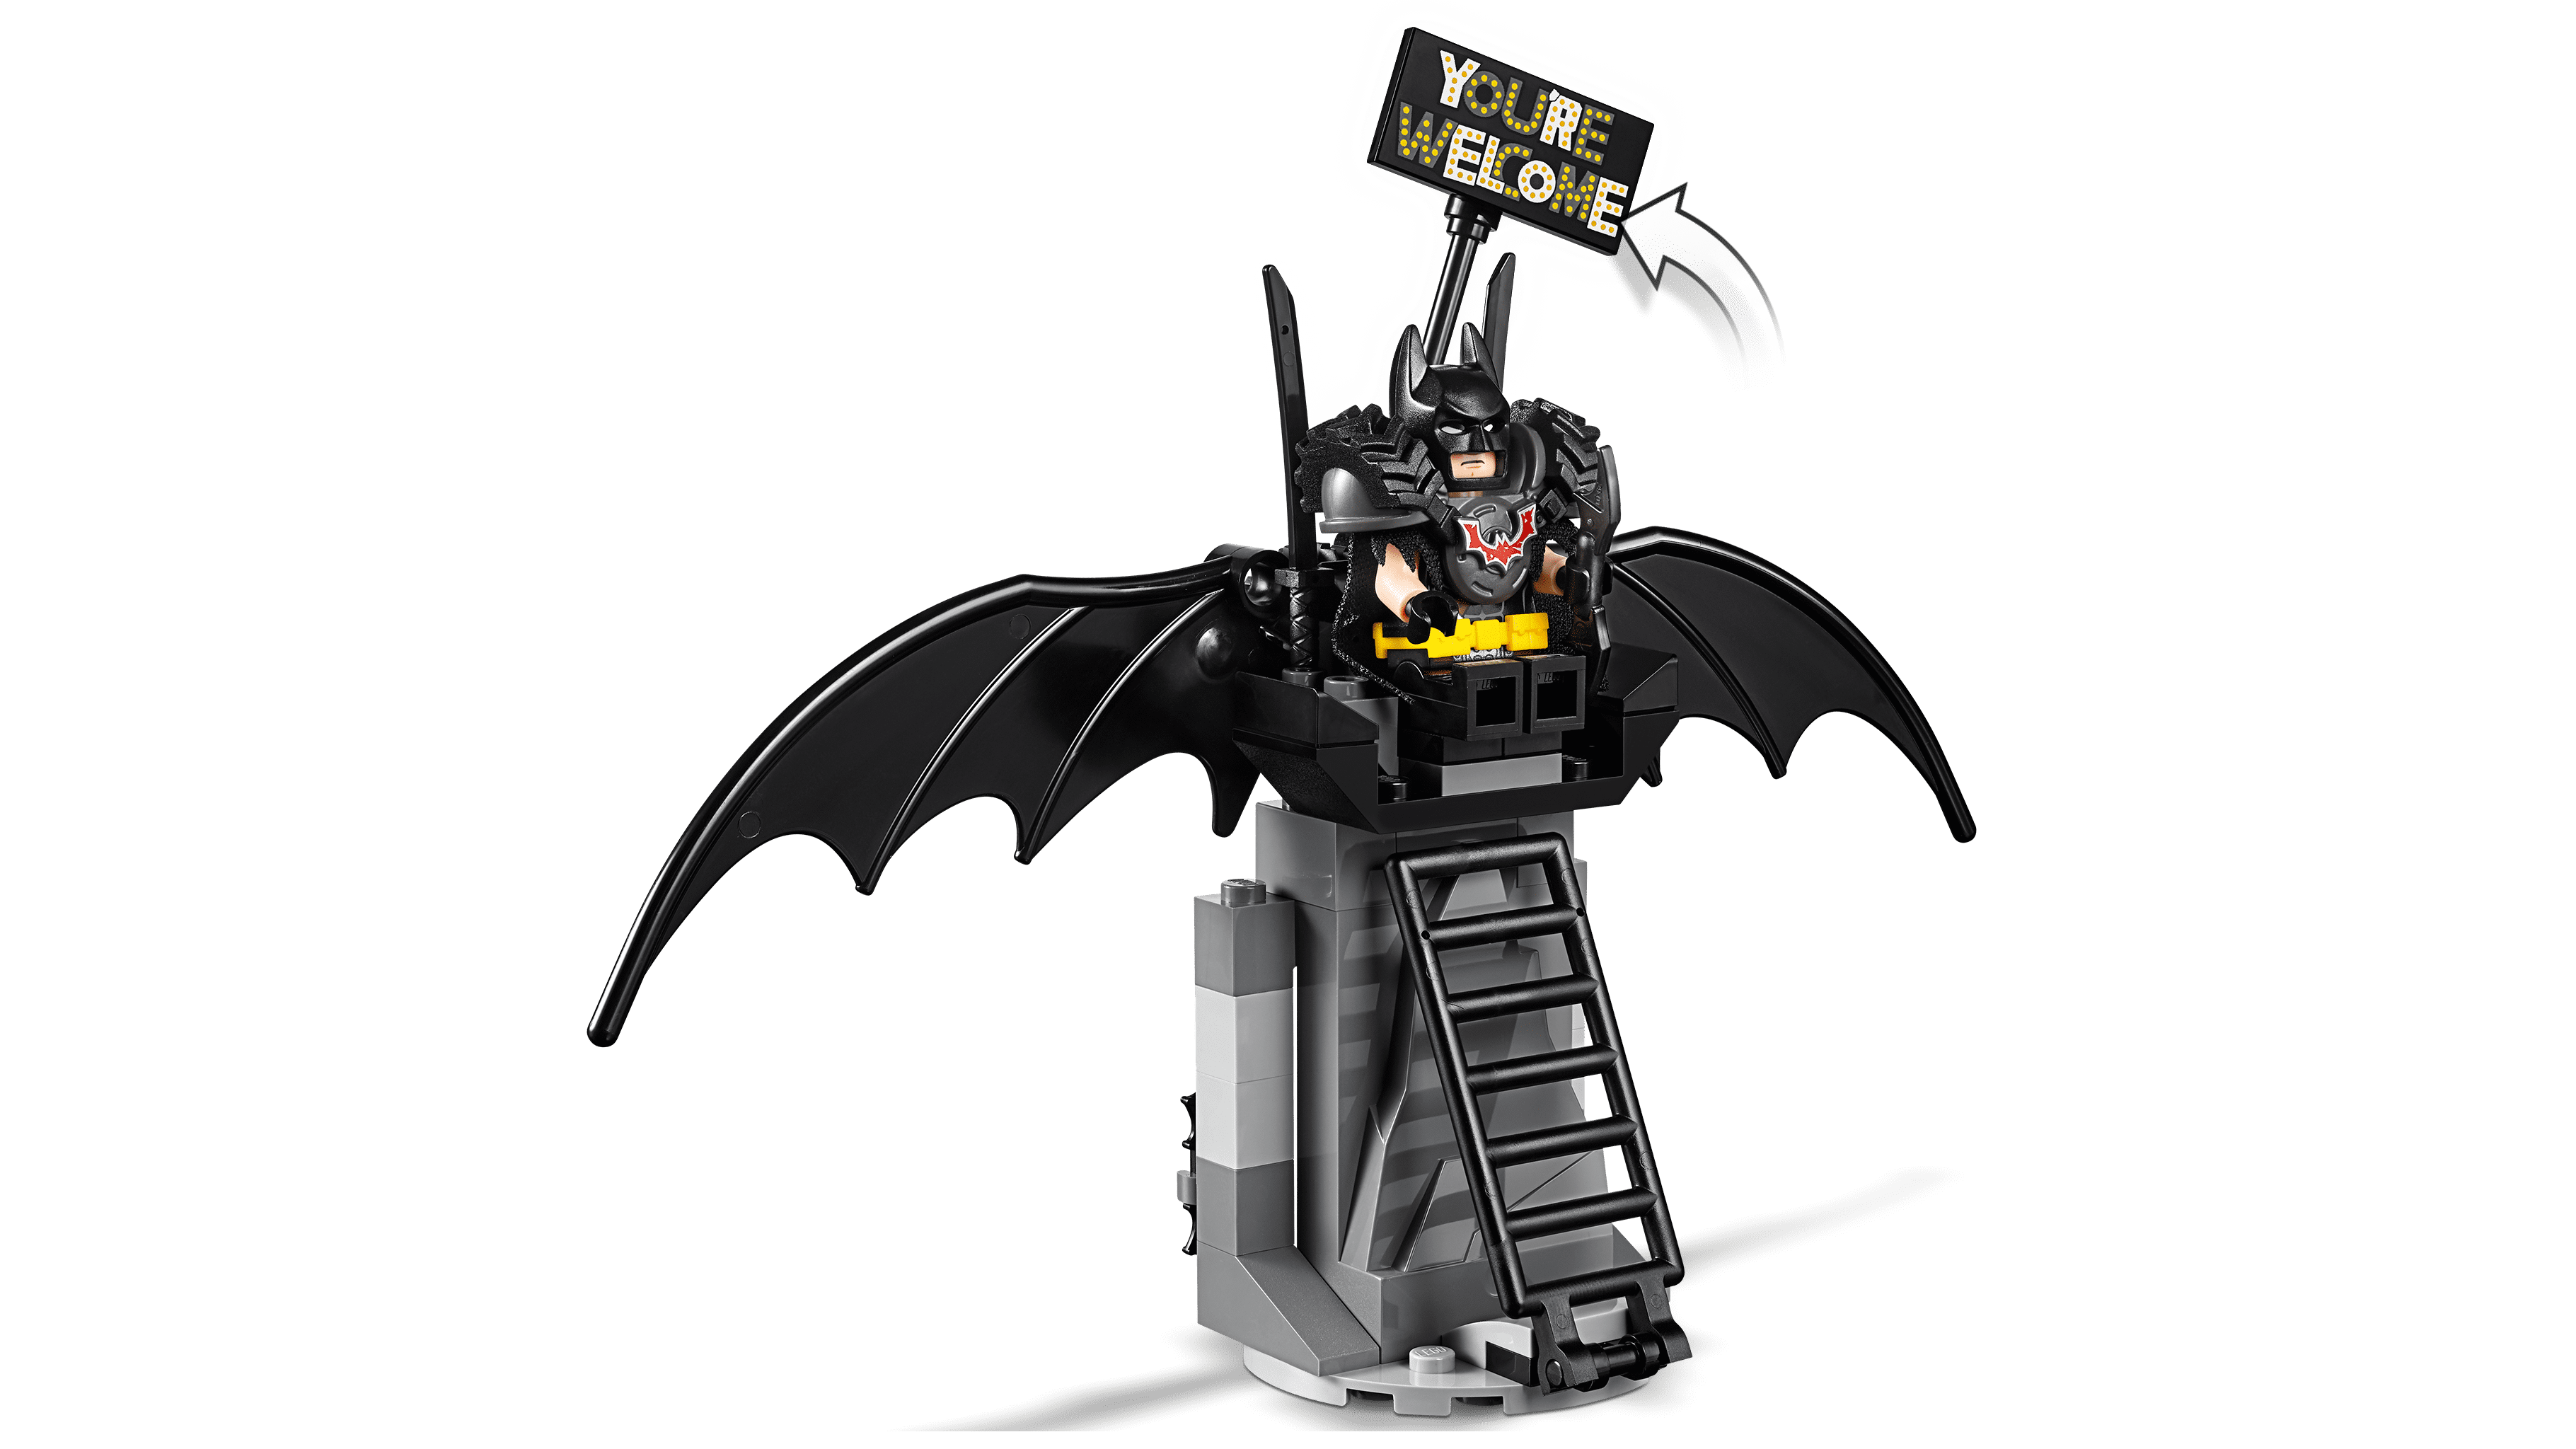 LEGO Movie Battle-Ready Batman? and MetalBeard 70836 